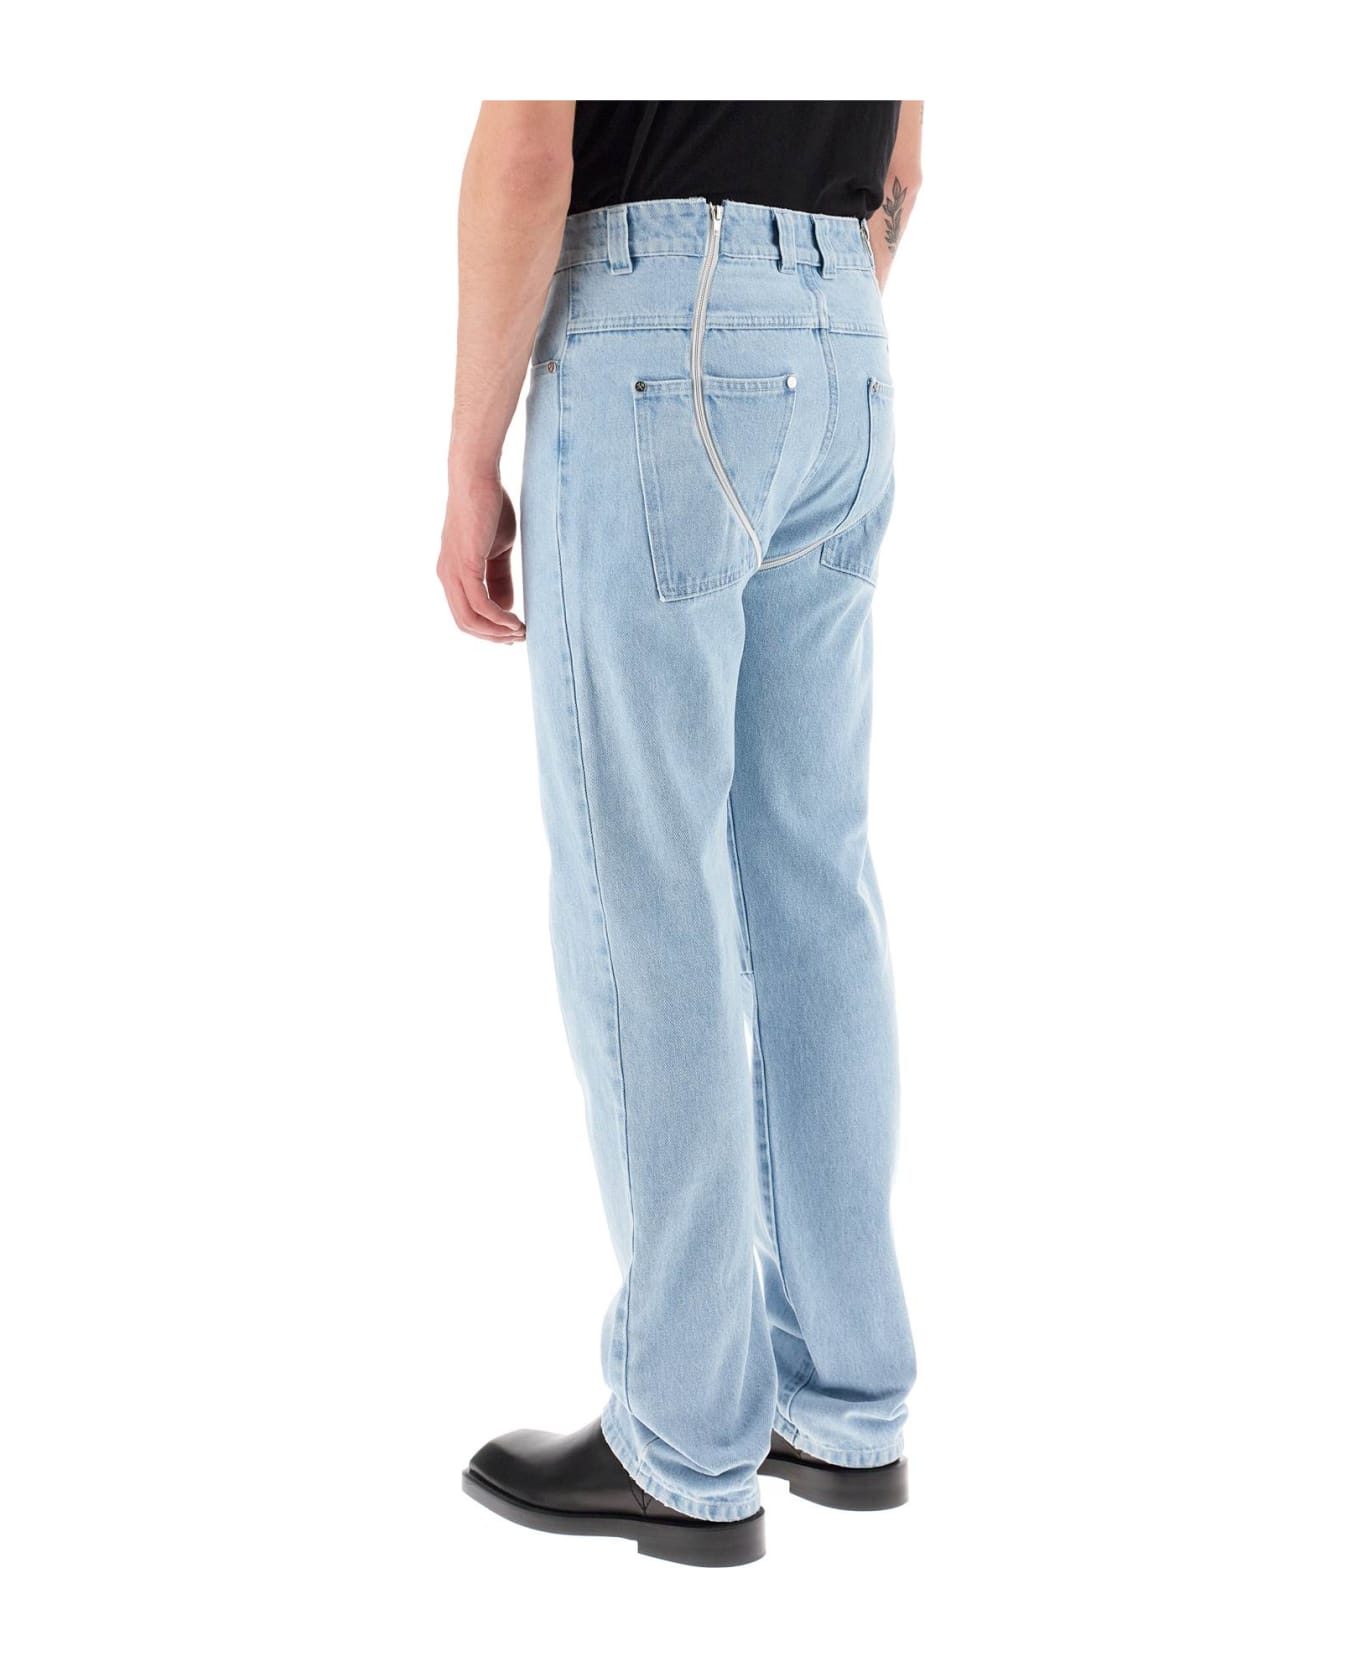 GMBH Straight Leg Jeans With Double Zipper - LIGHT INDIGO BLUE (Light blue) デニム